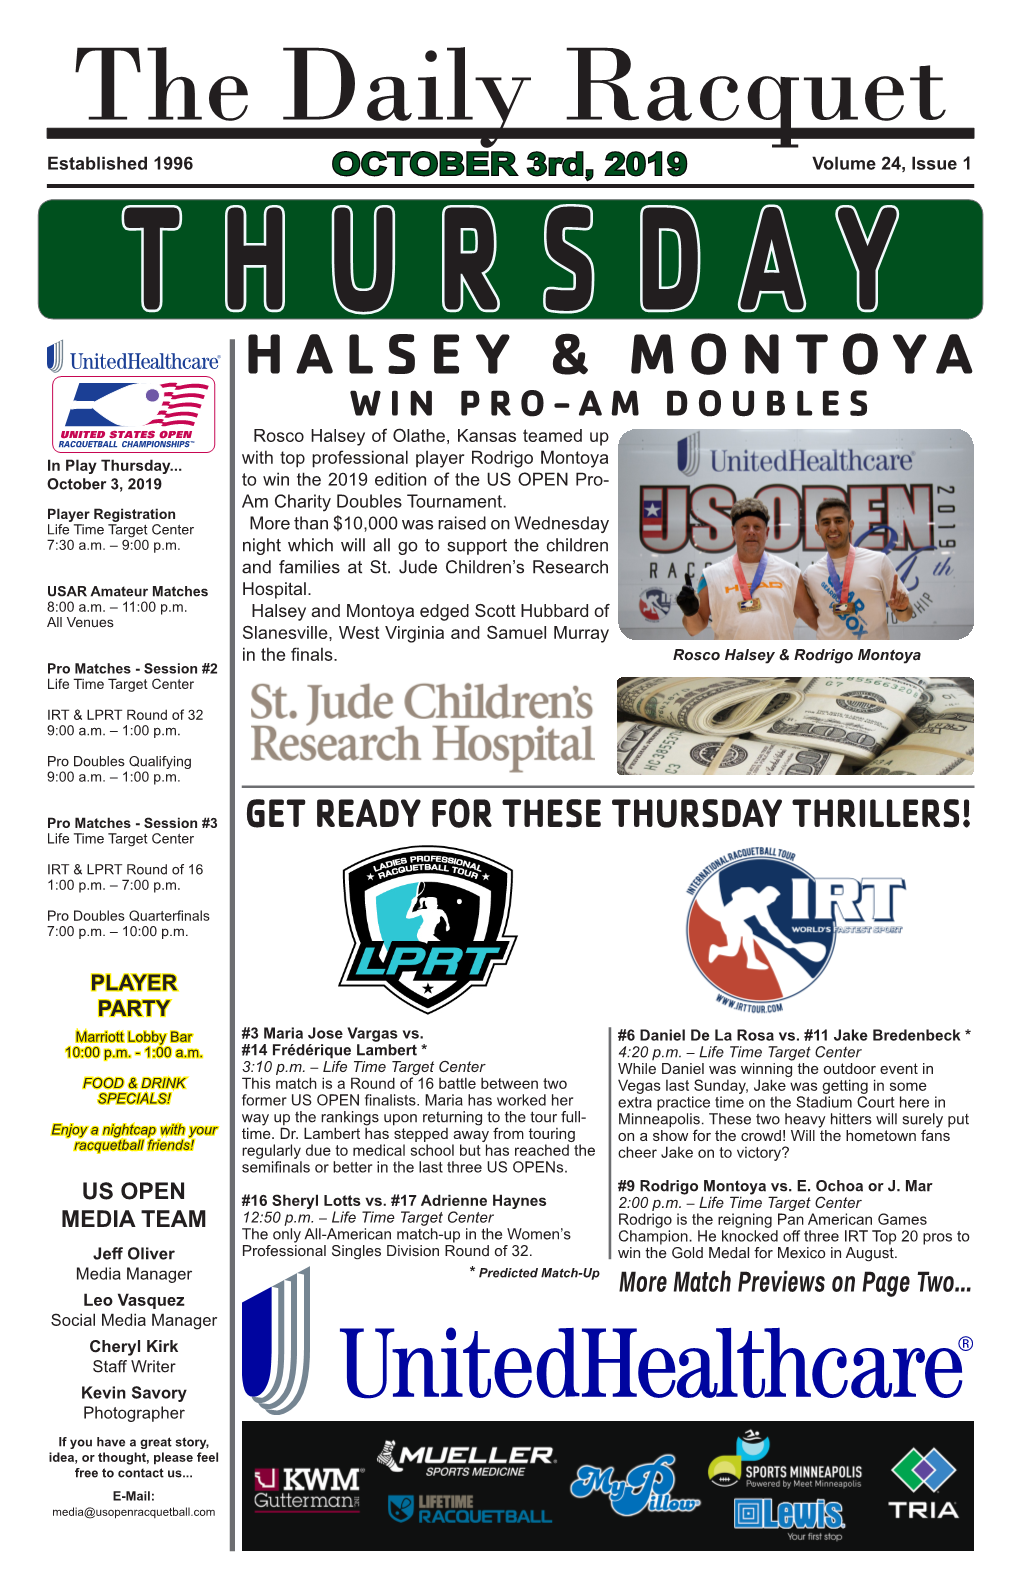 THURSDAY HALSEY & MONTOYA WIN PRO-AM DOUBLES Rosco Halsey of Olathe, Kansas Teamed up in Play Thursday